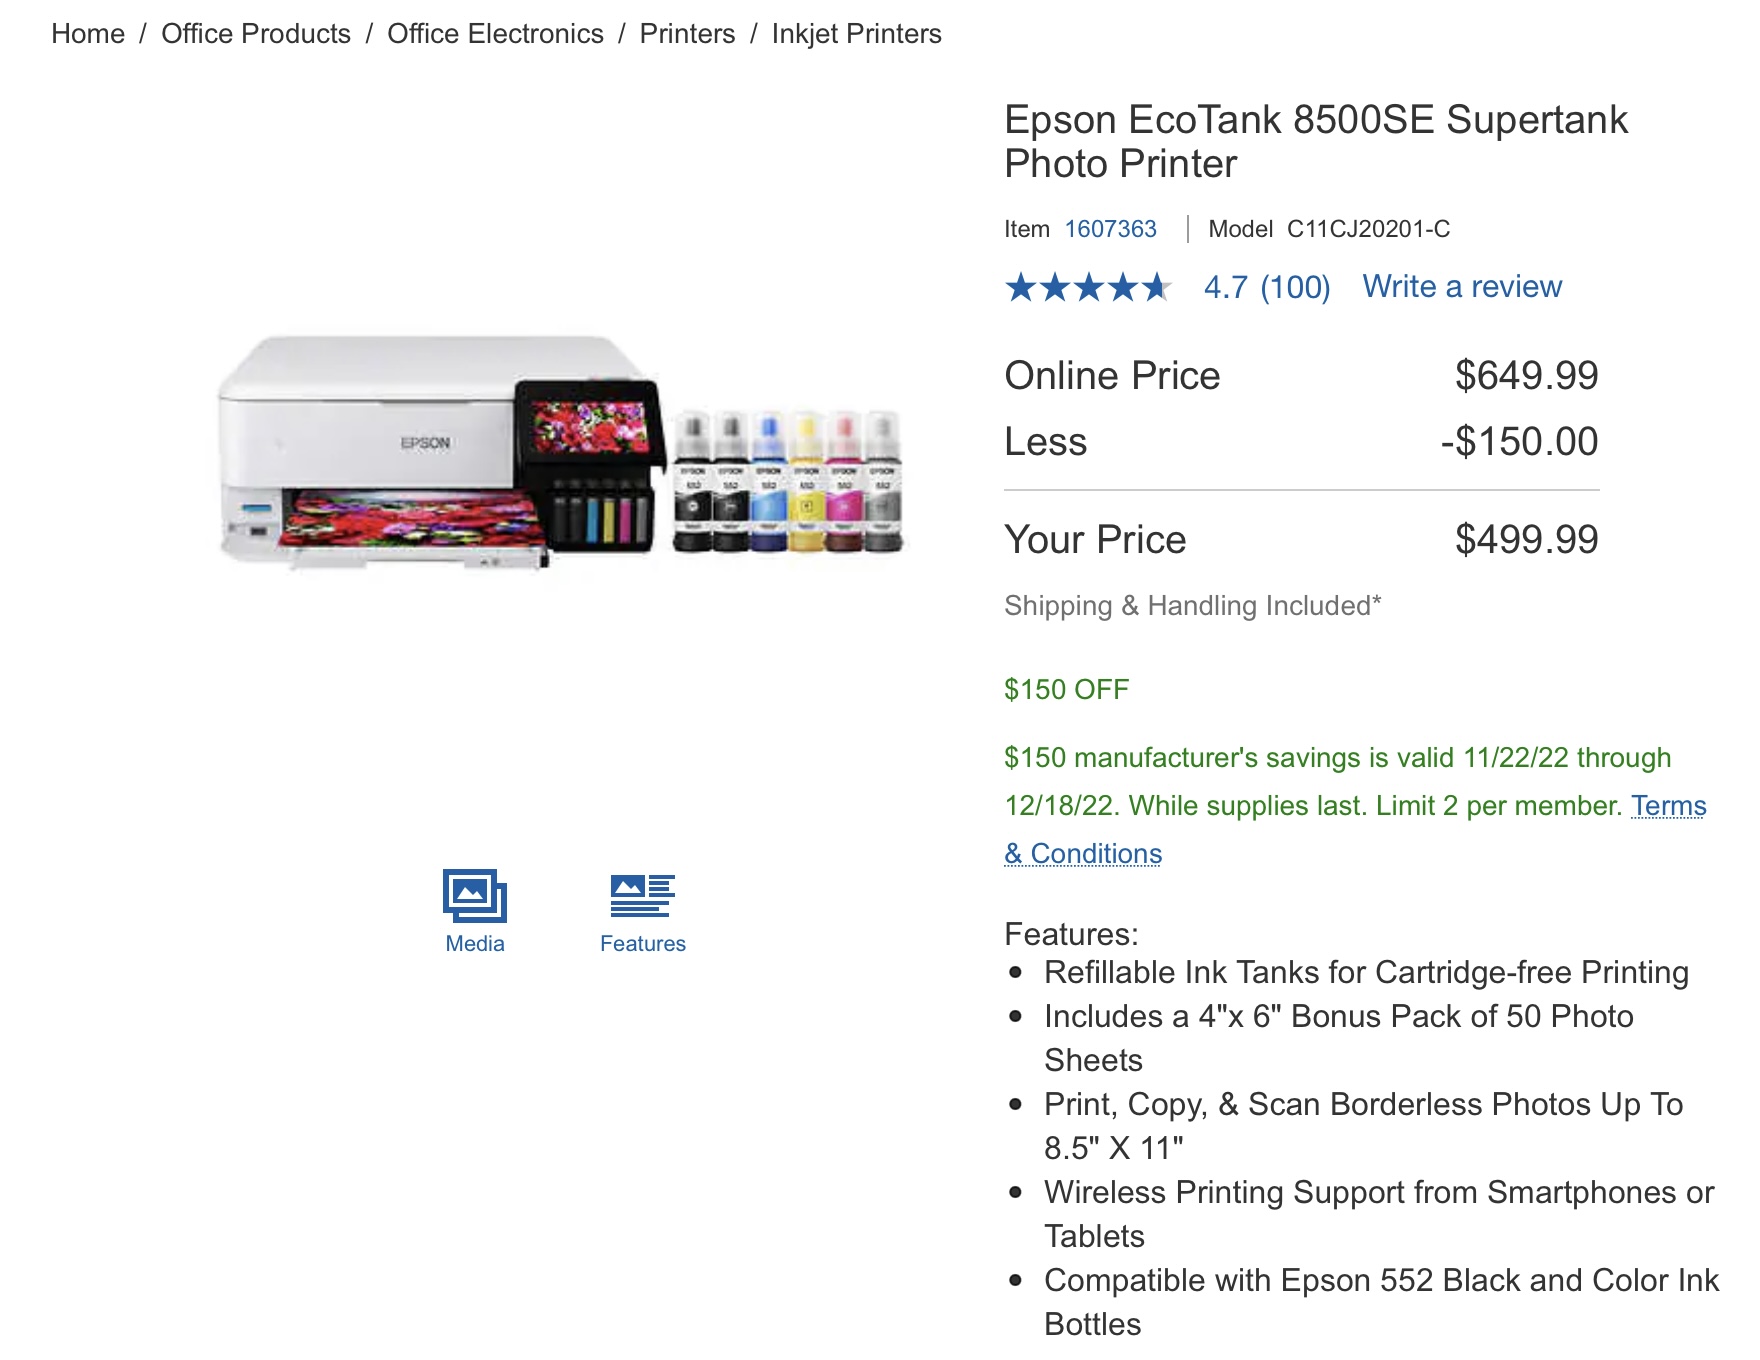 Epson EcoTank 8500SE Supertank Photo Printer $499.99 - Costco.com